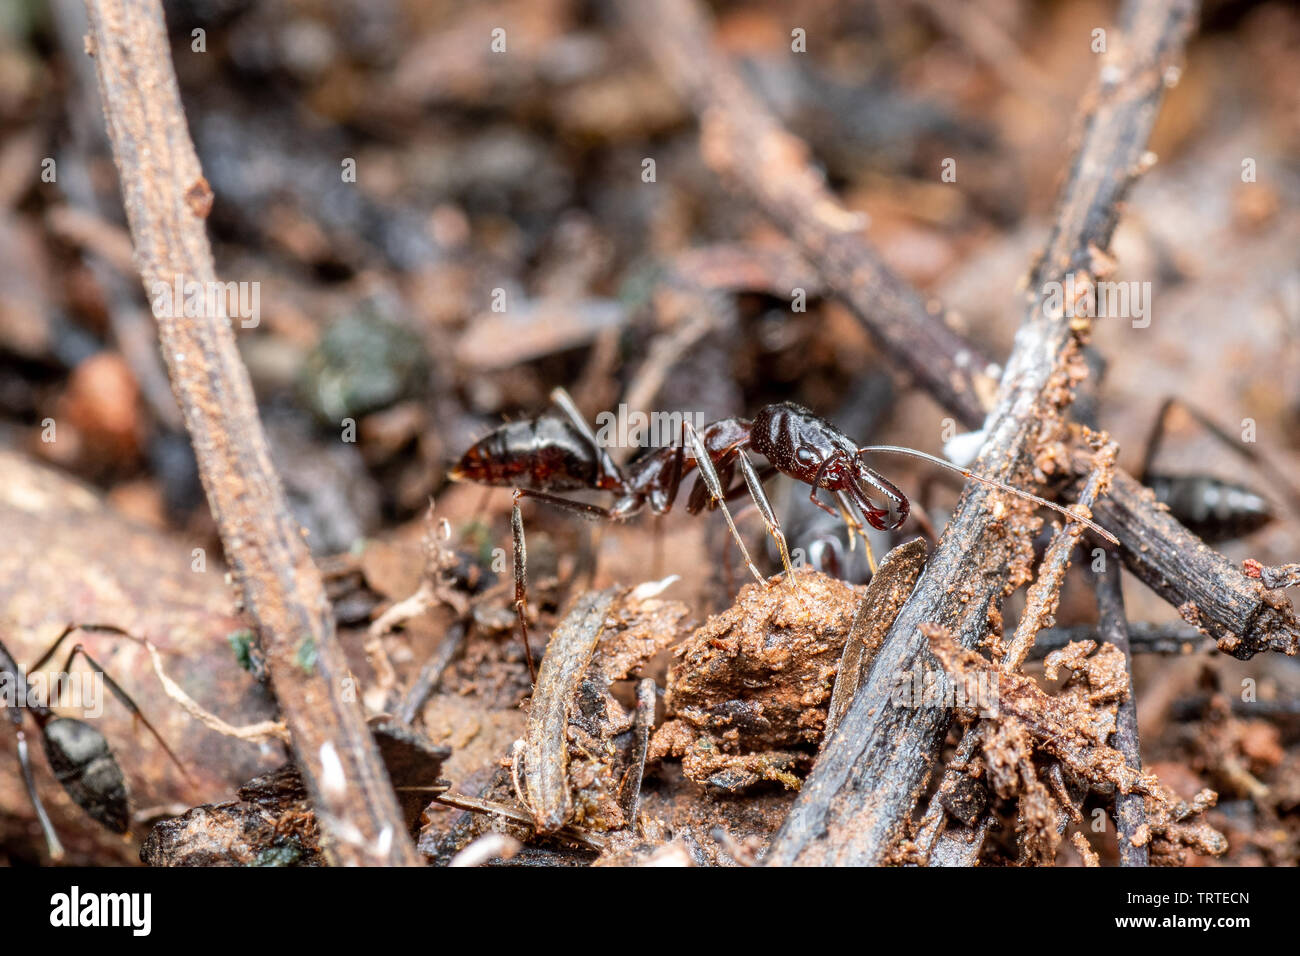 Odontomachus trap jaw ants foraging in Australian rainforest Stock Photo